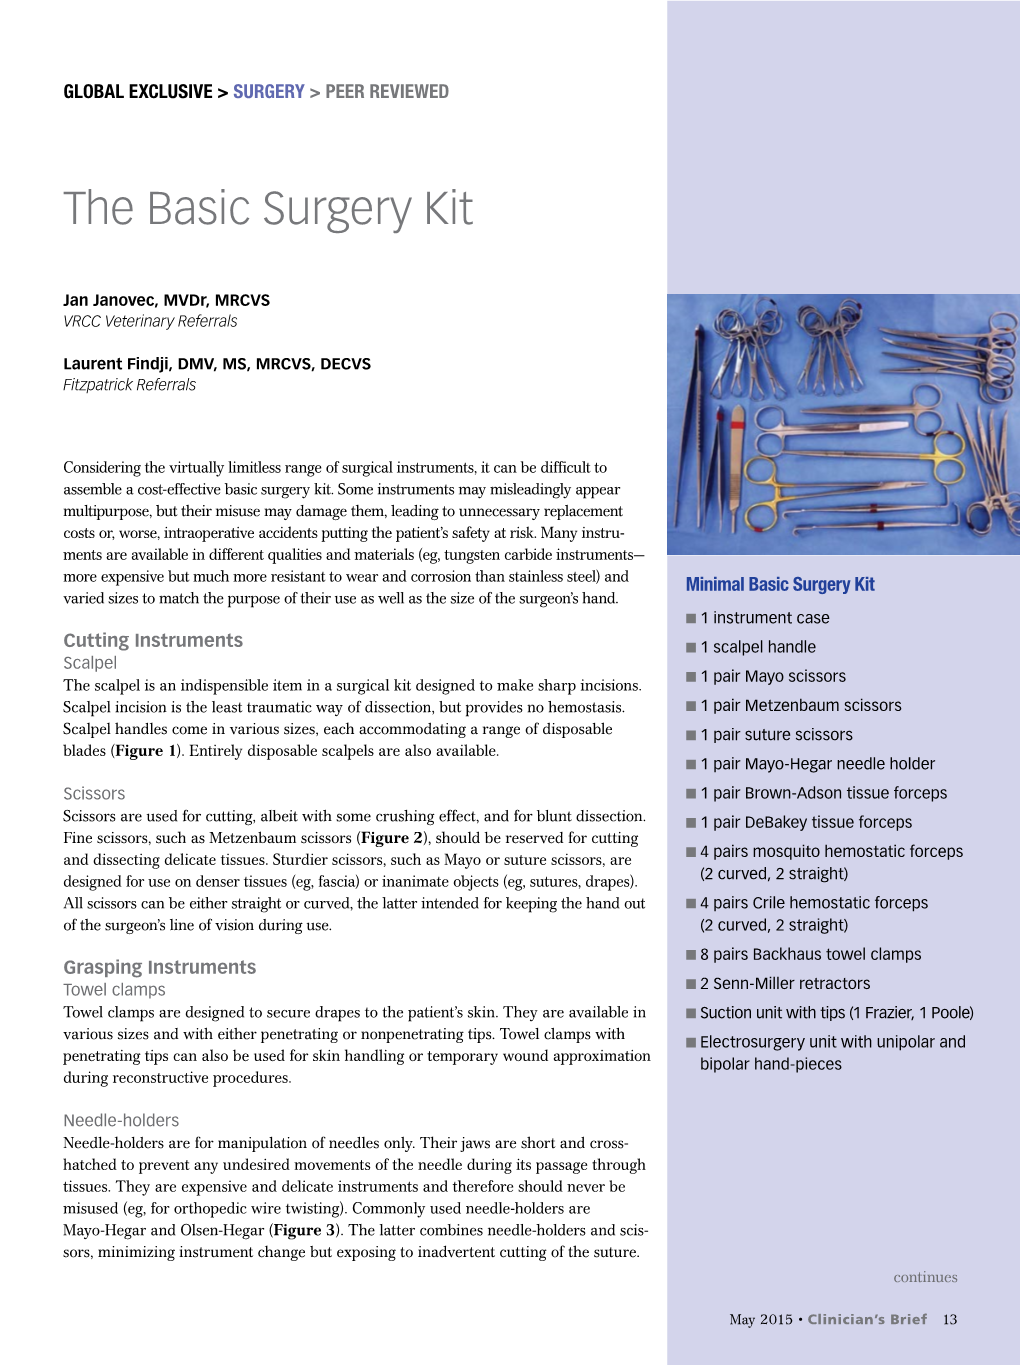 The Basic Surgery Kit